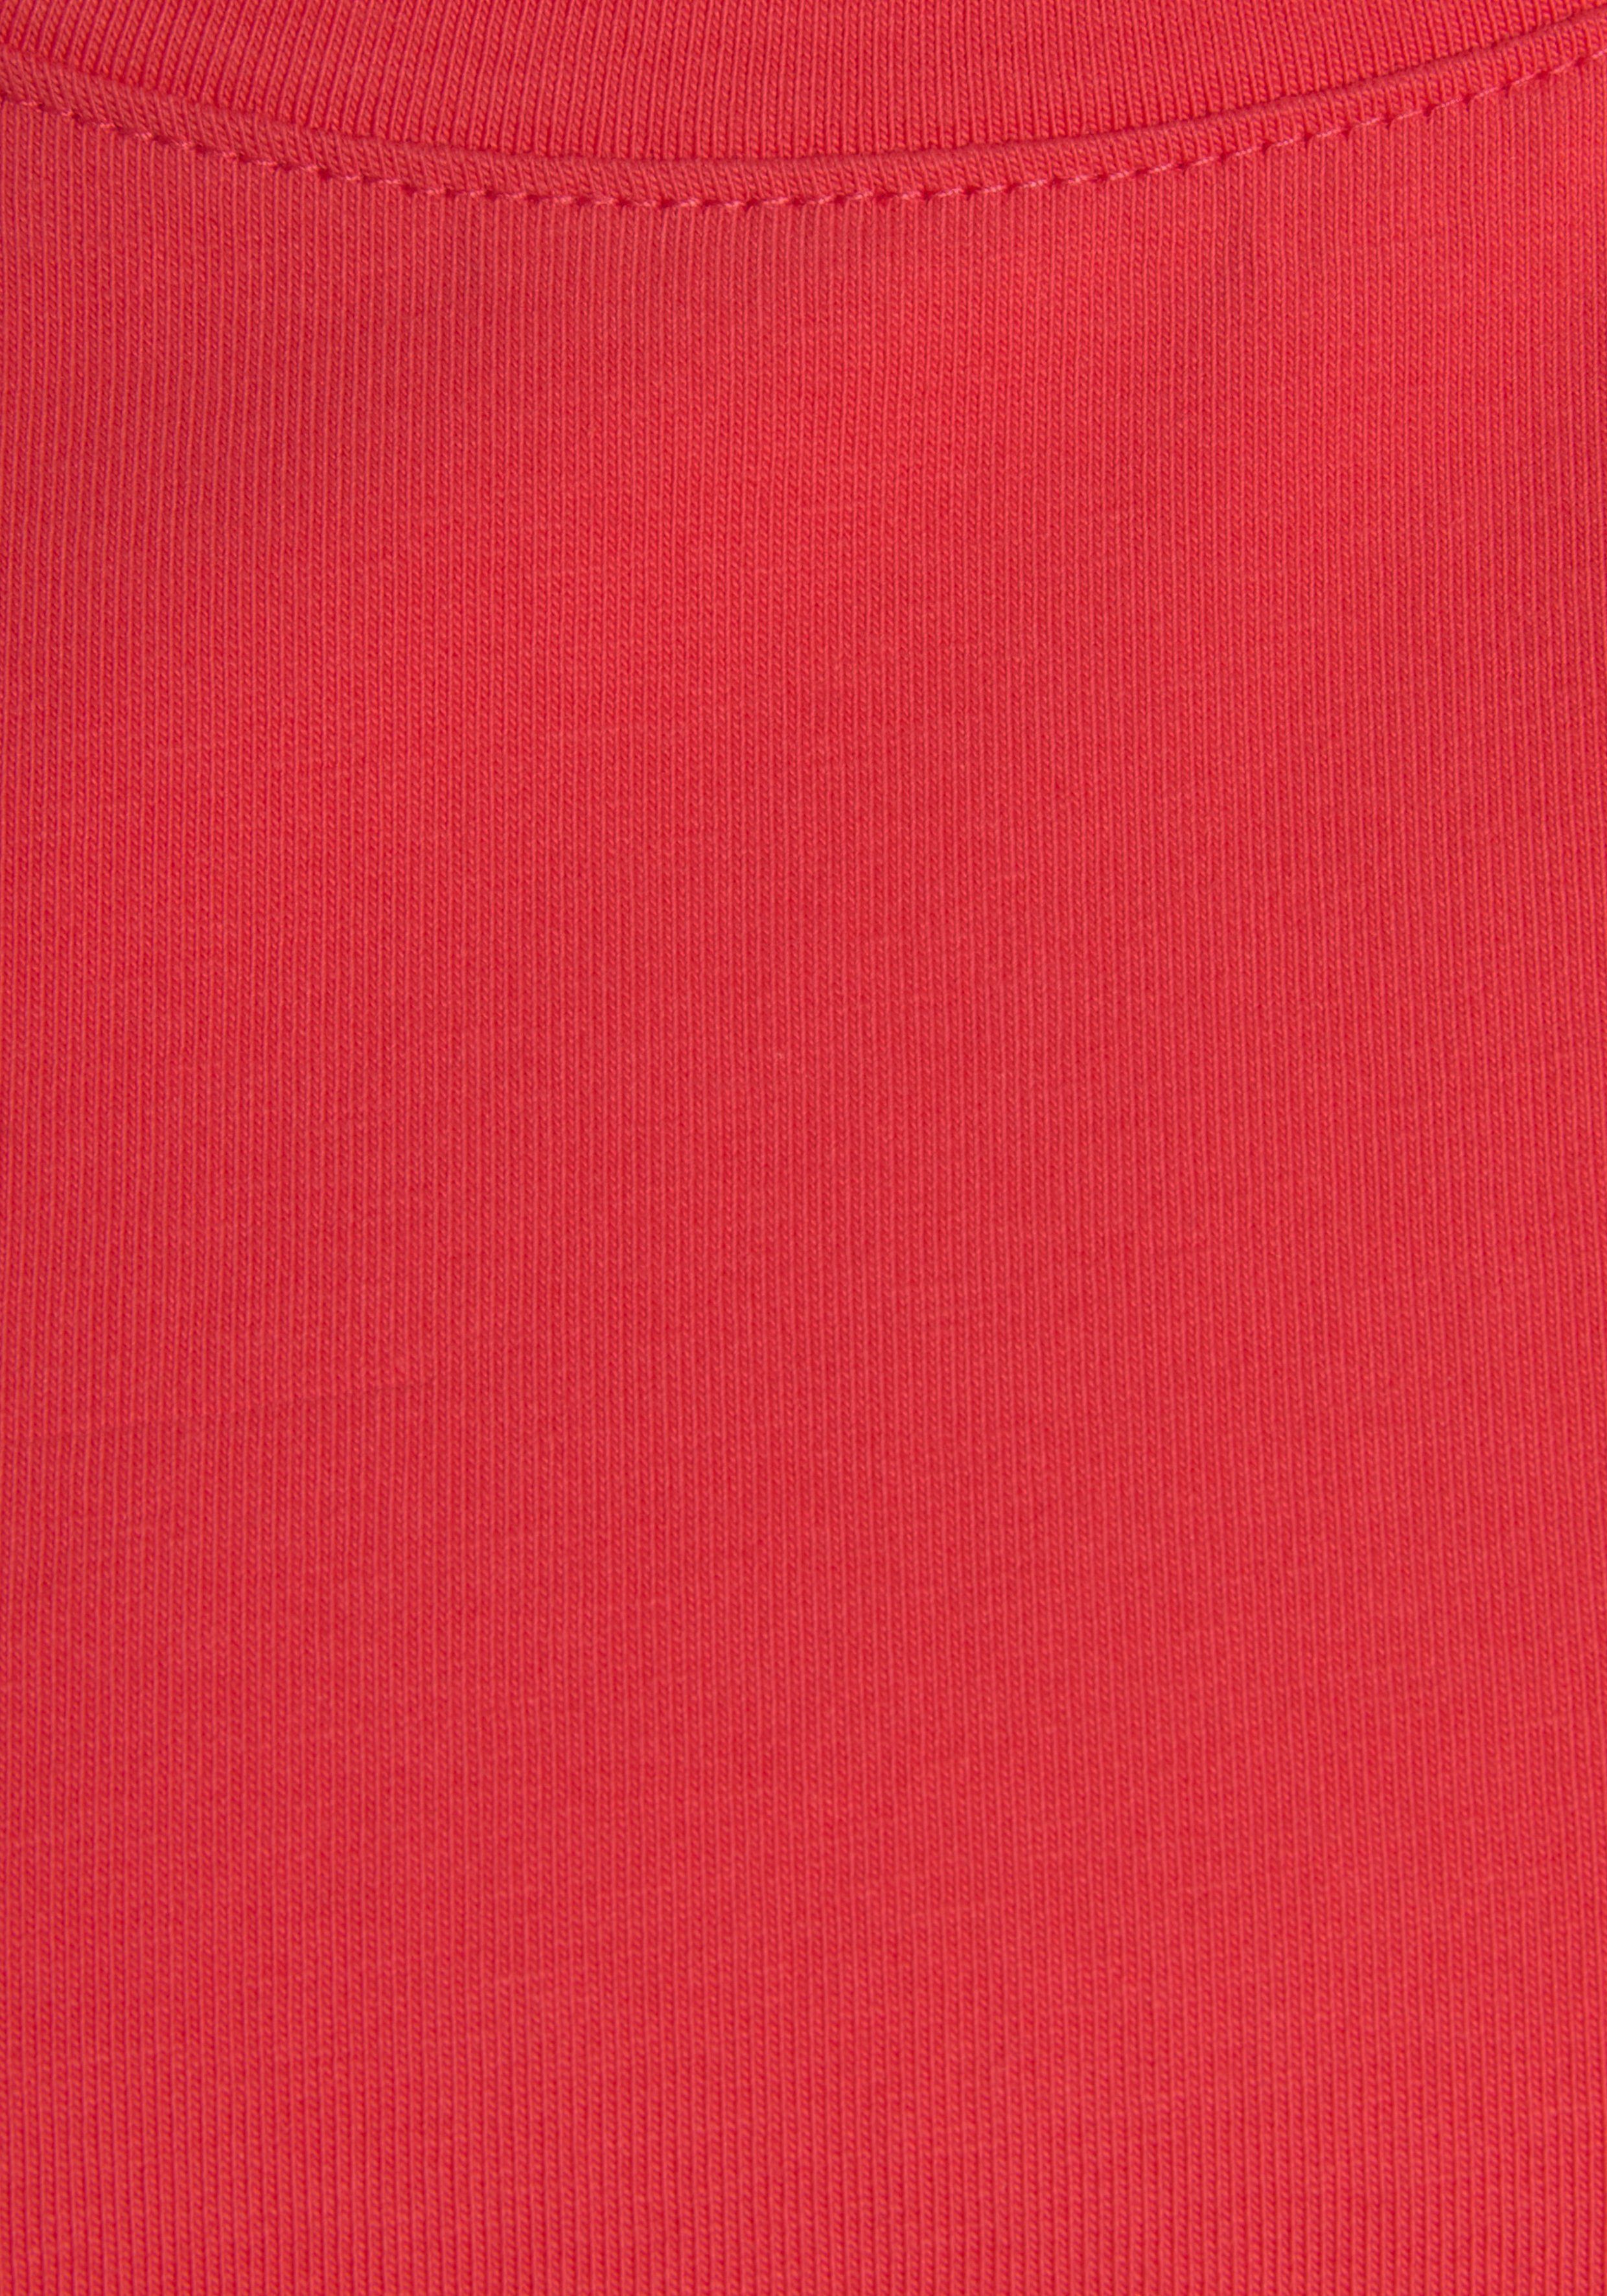 Ärmelaufschlag Stil, im maritimen rot mit T-Shirt H.I.S Loungewear